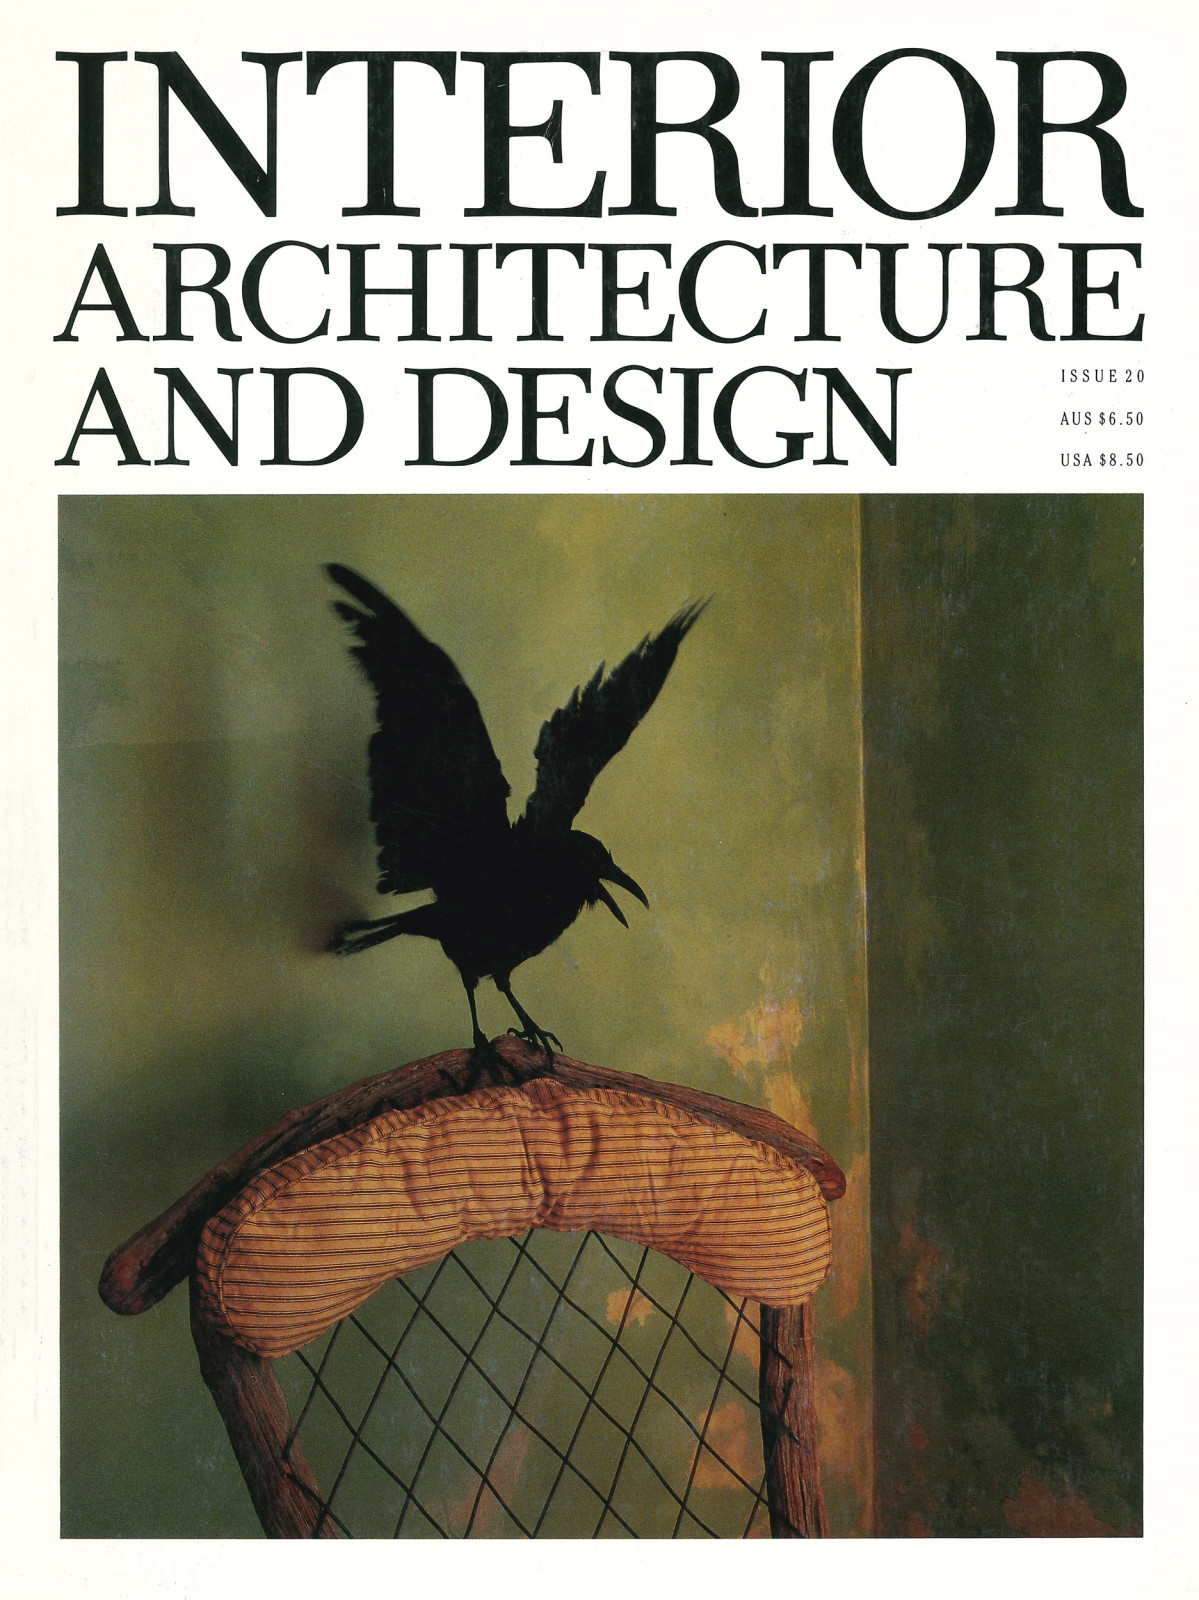 Interior Architecture and Design